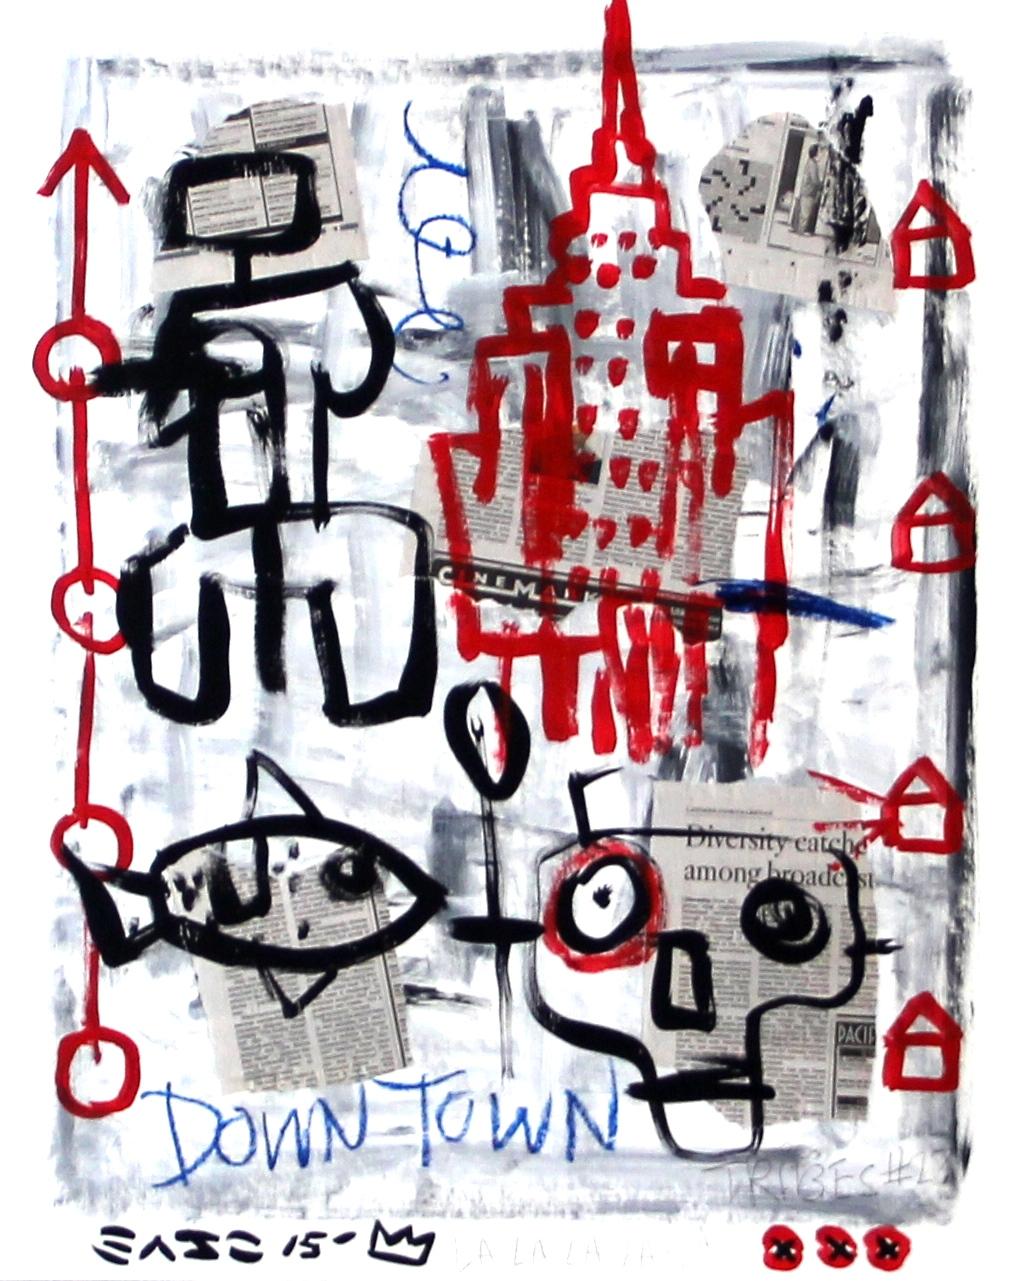 "Downtown" - Original Empire State Building Street Art by Gary John